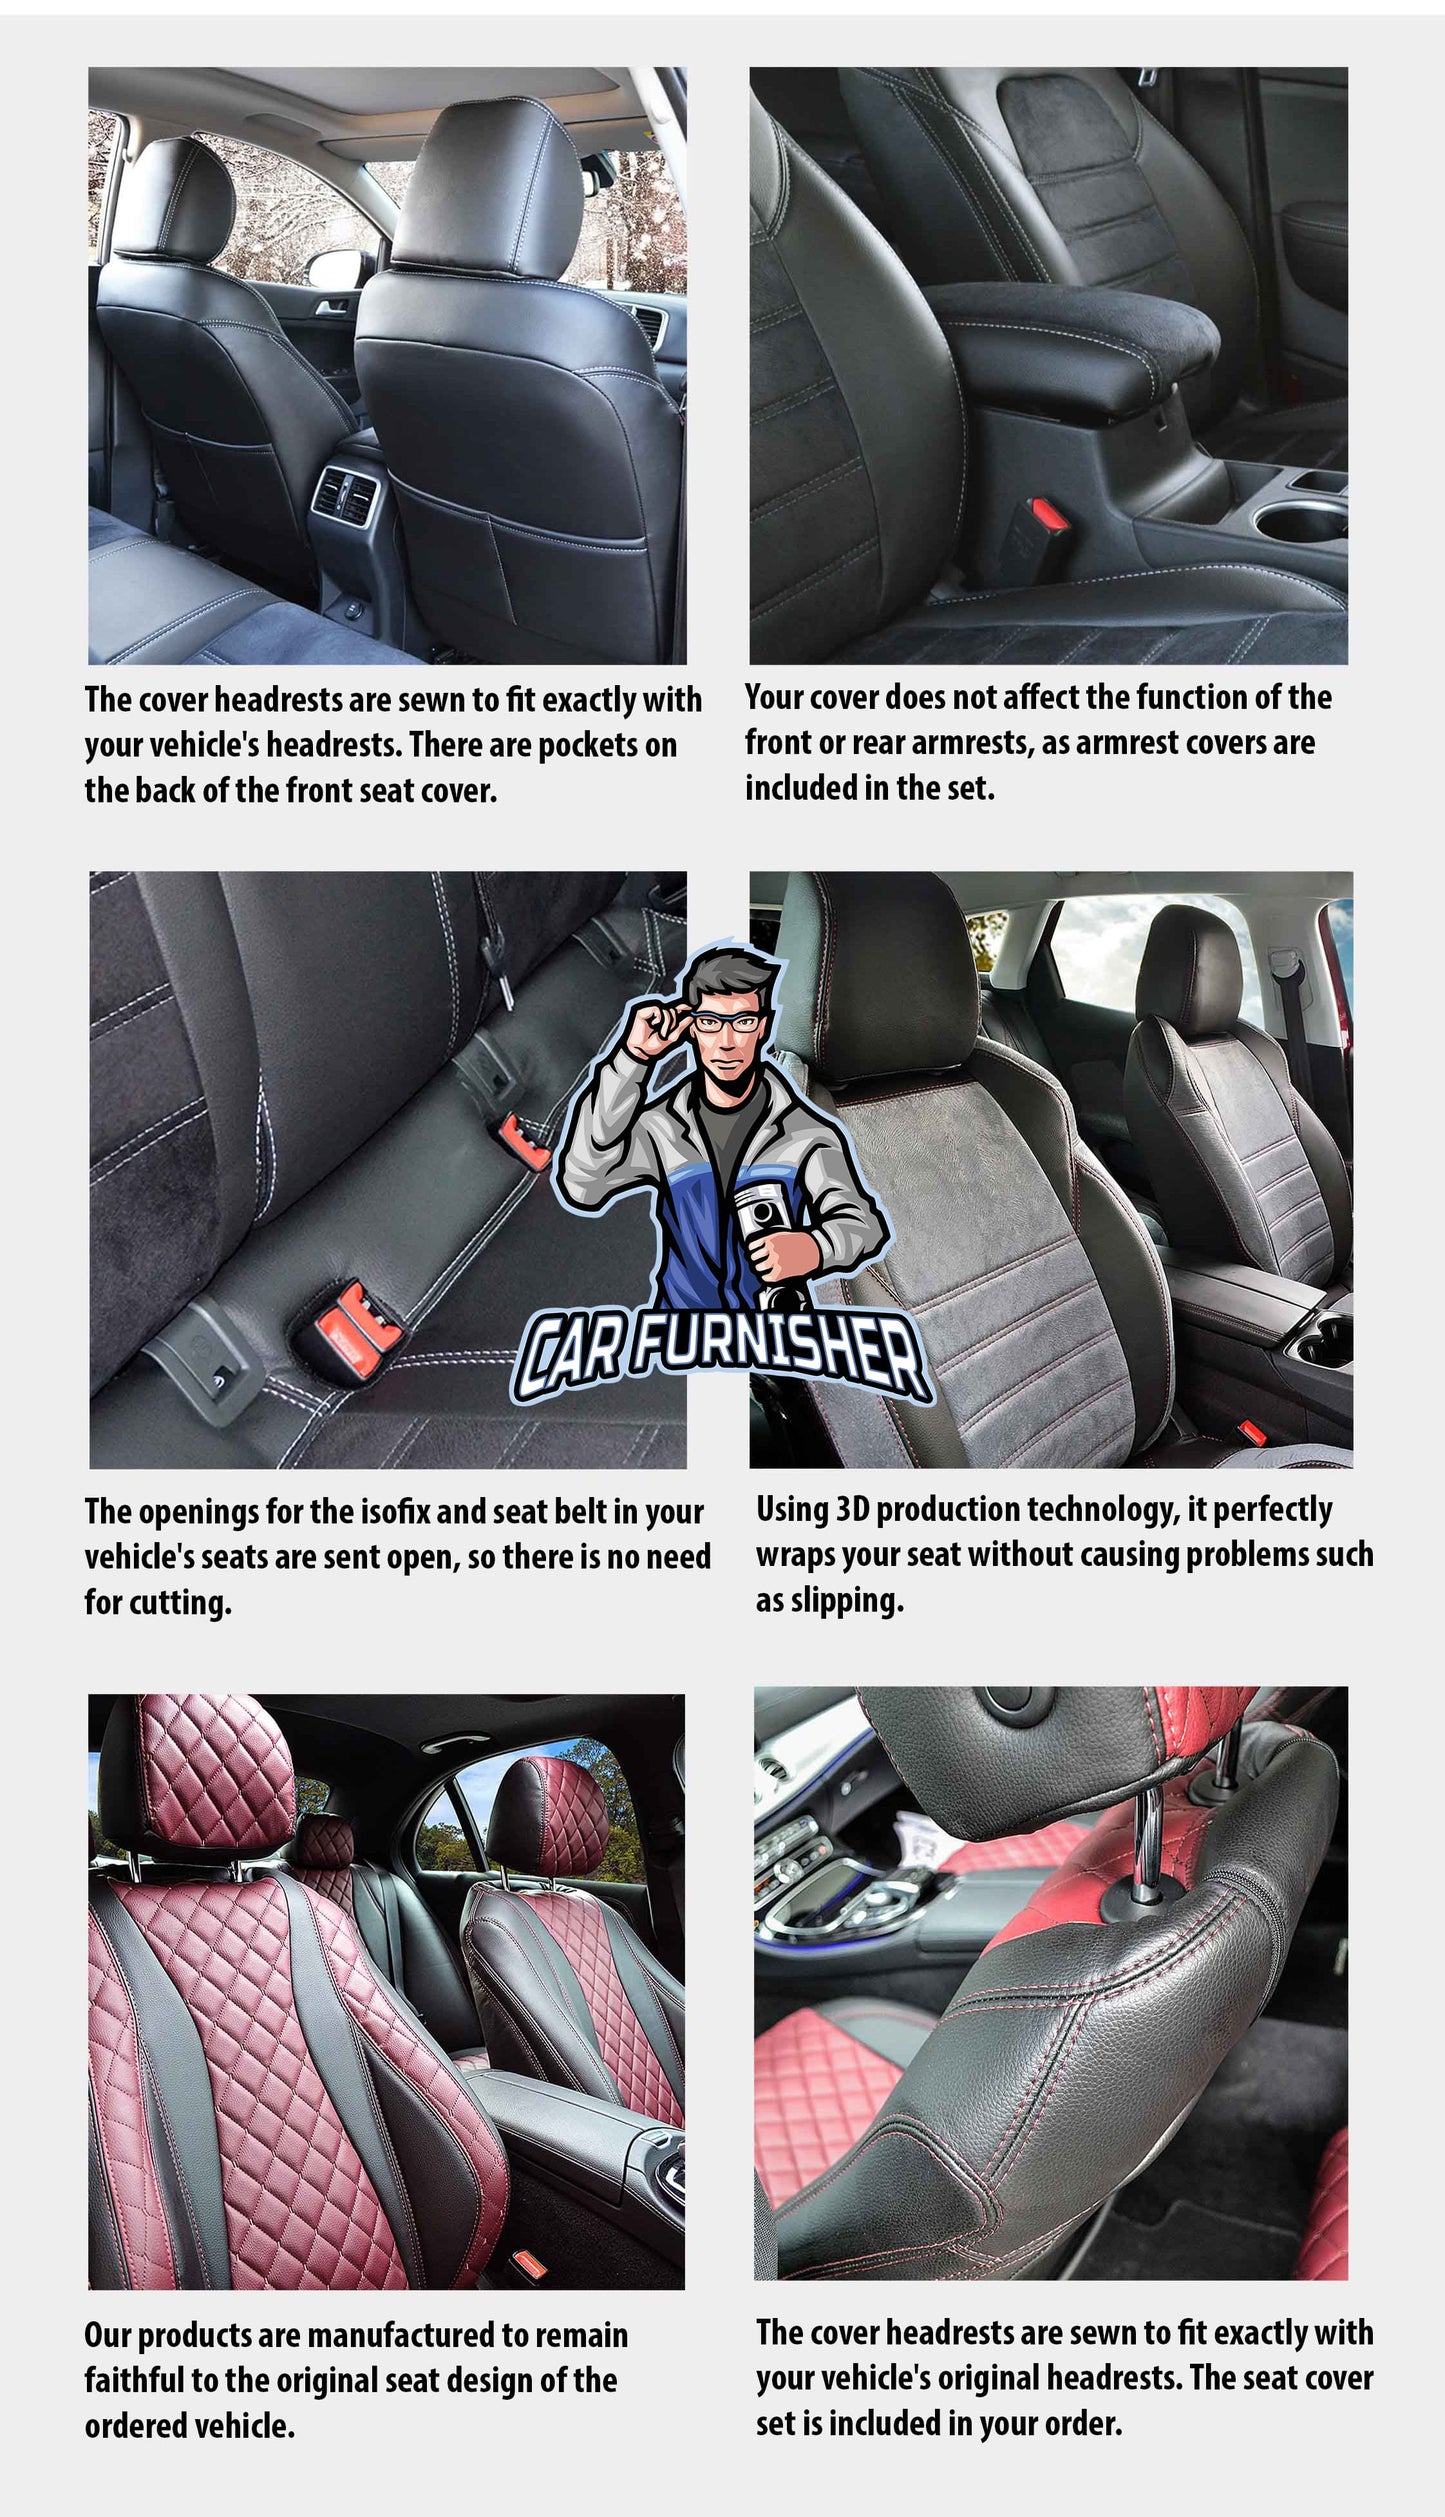 Kia Stonic Seat Covers Camouflage Waterproof Design Montblanc Camo Waterproof Fabric